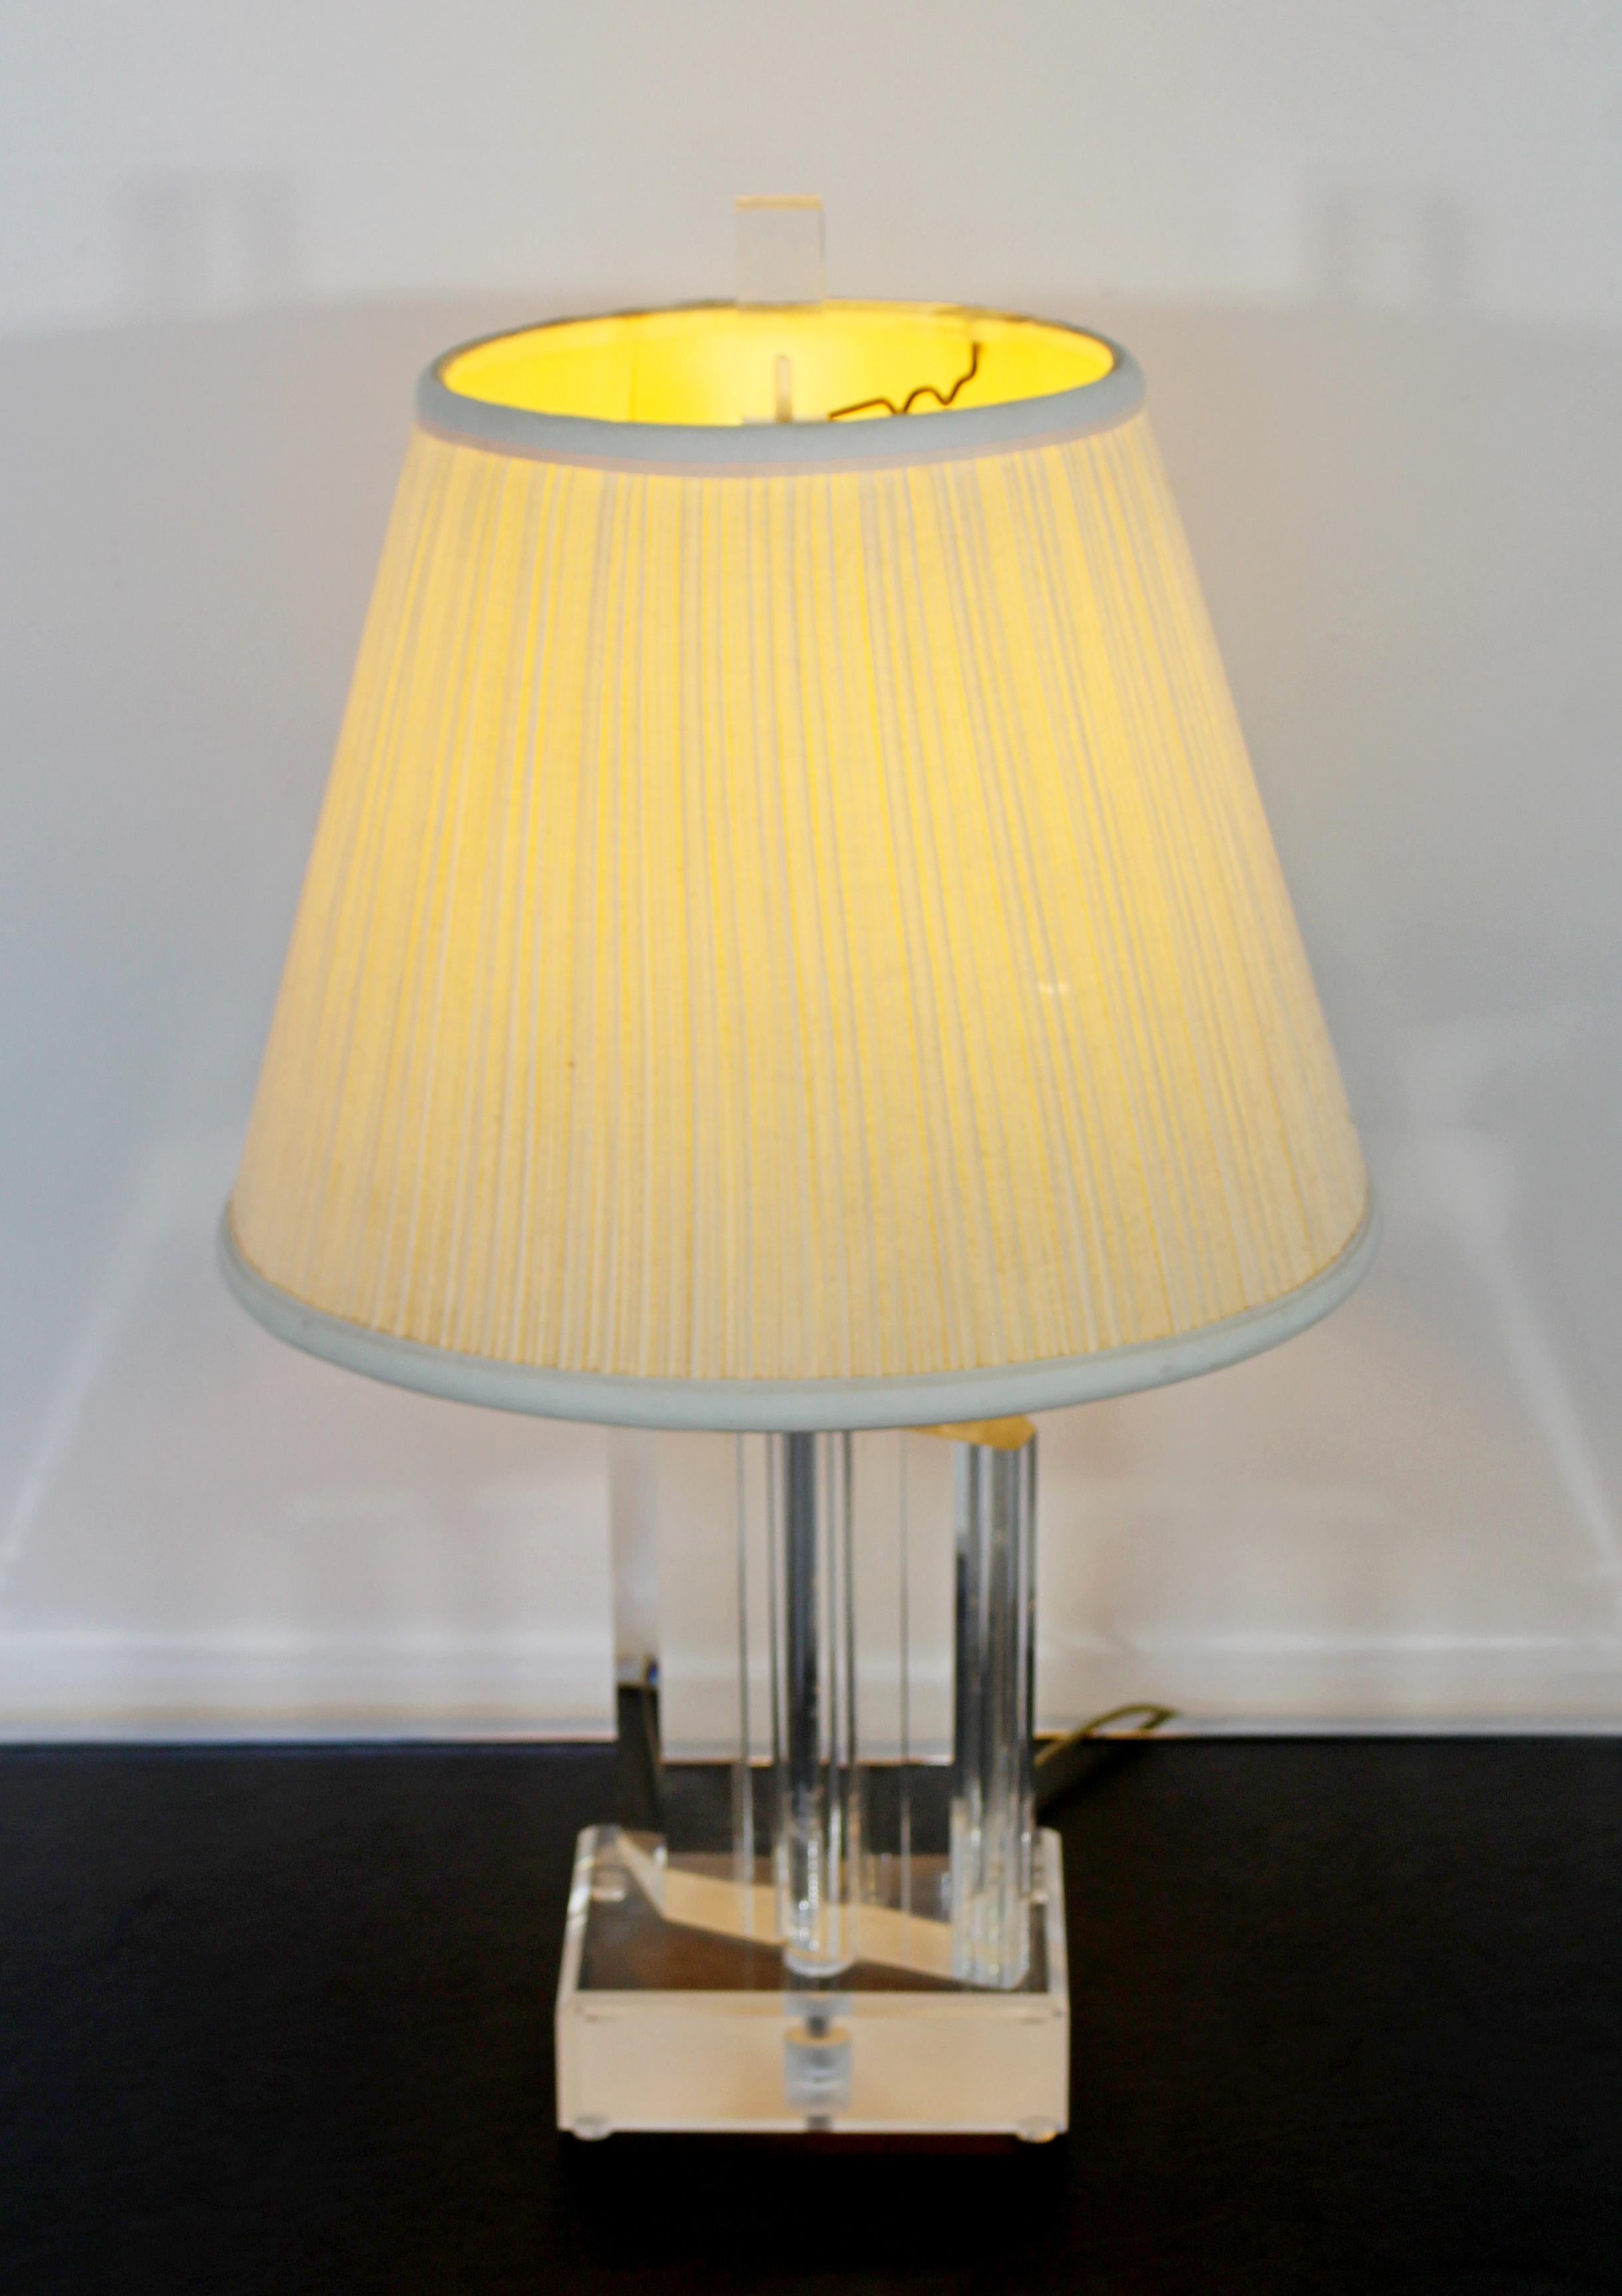 American Mid-Century Modern Angled Lucite Table Lamp Springer Era 1970s Original Finial